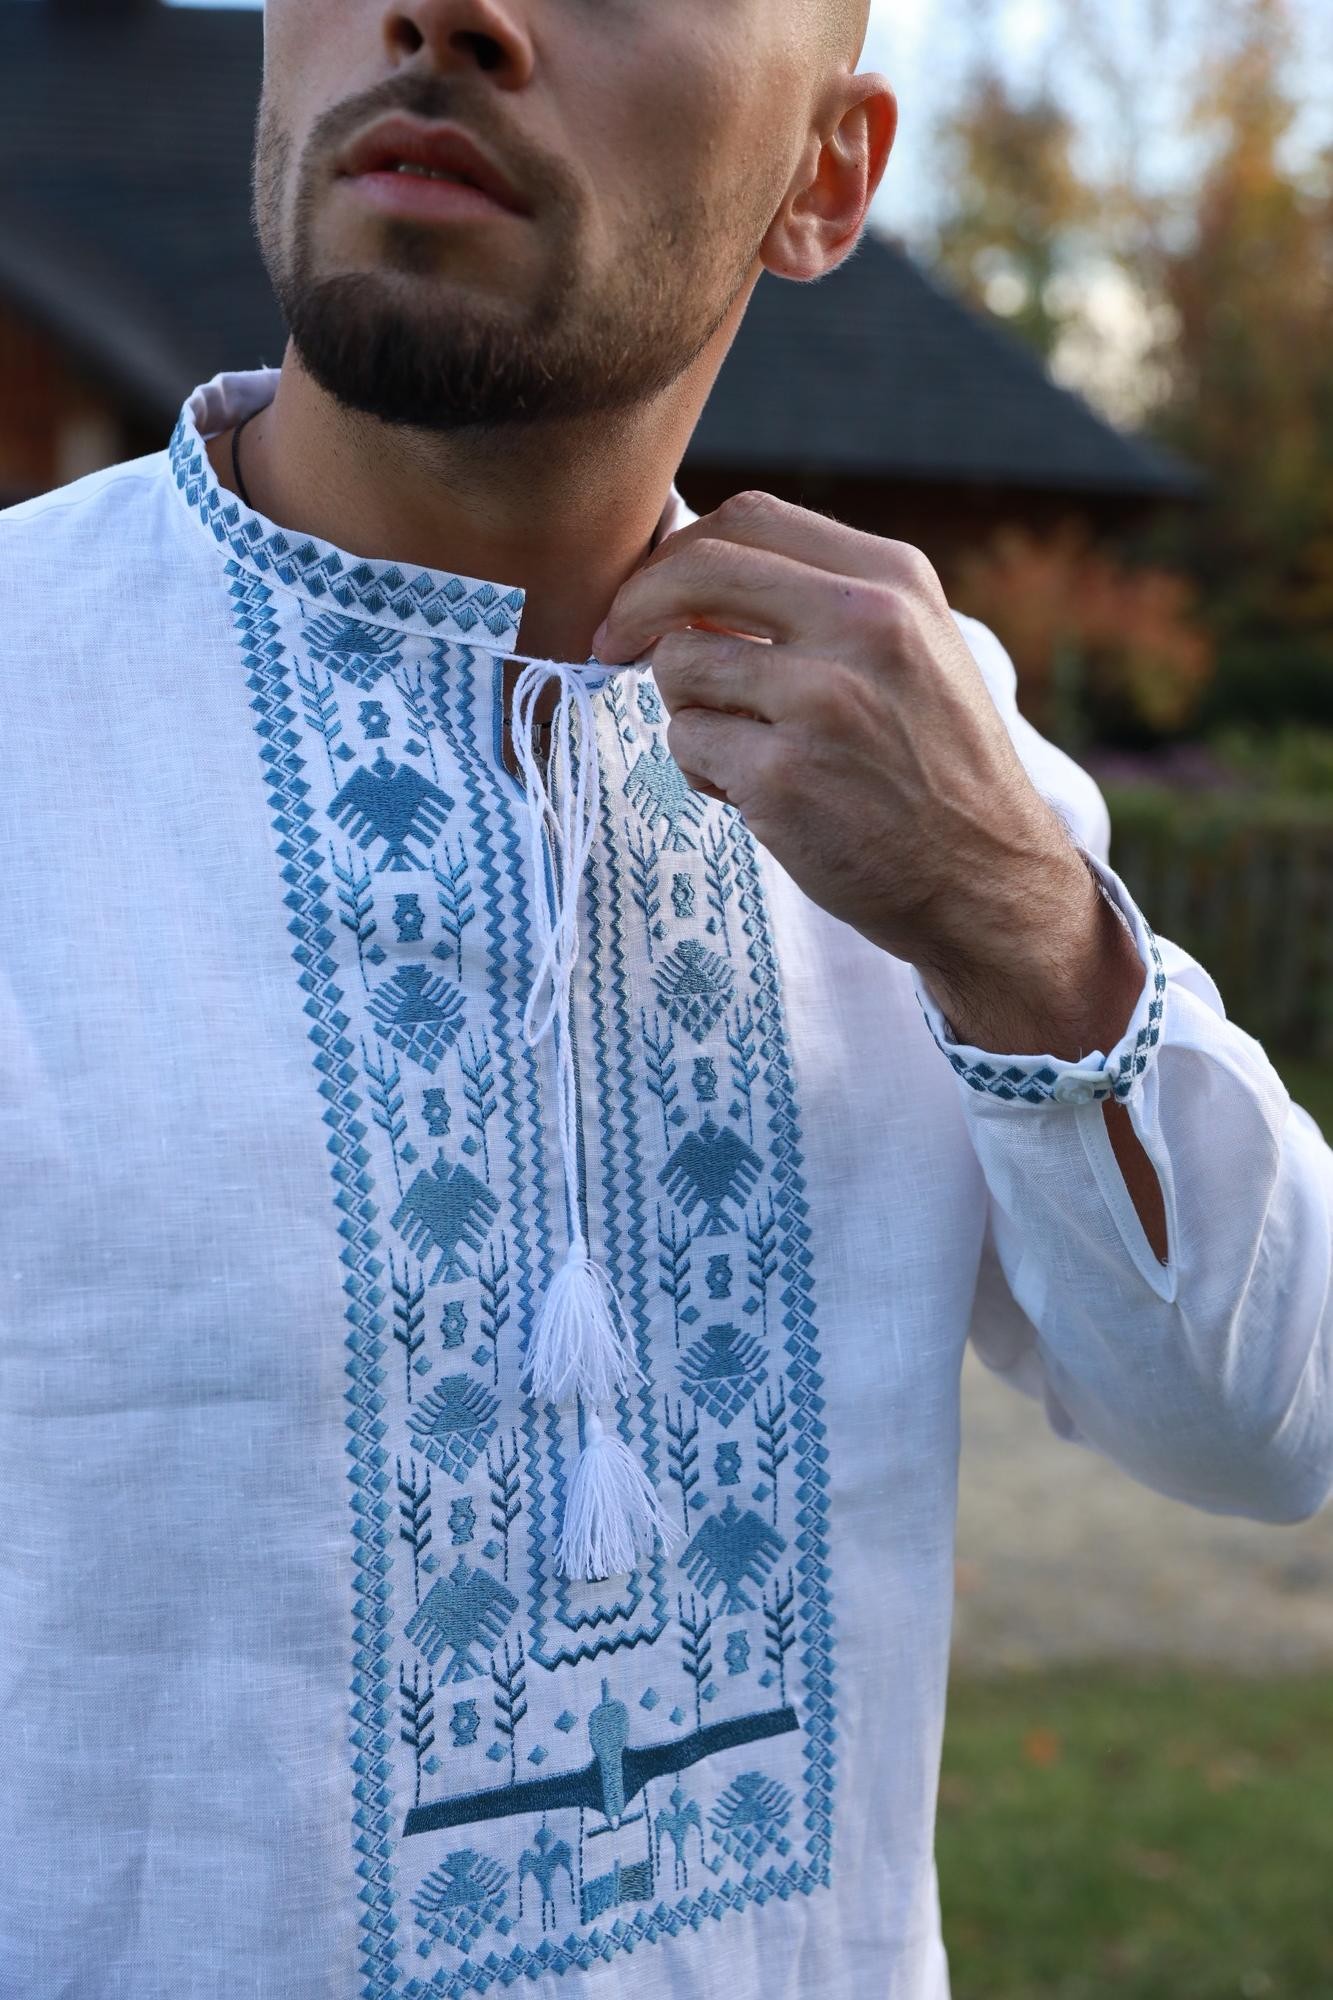 Bayraktar embroidery is blue